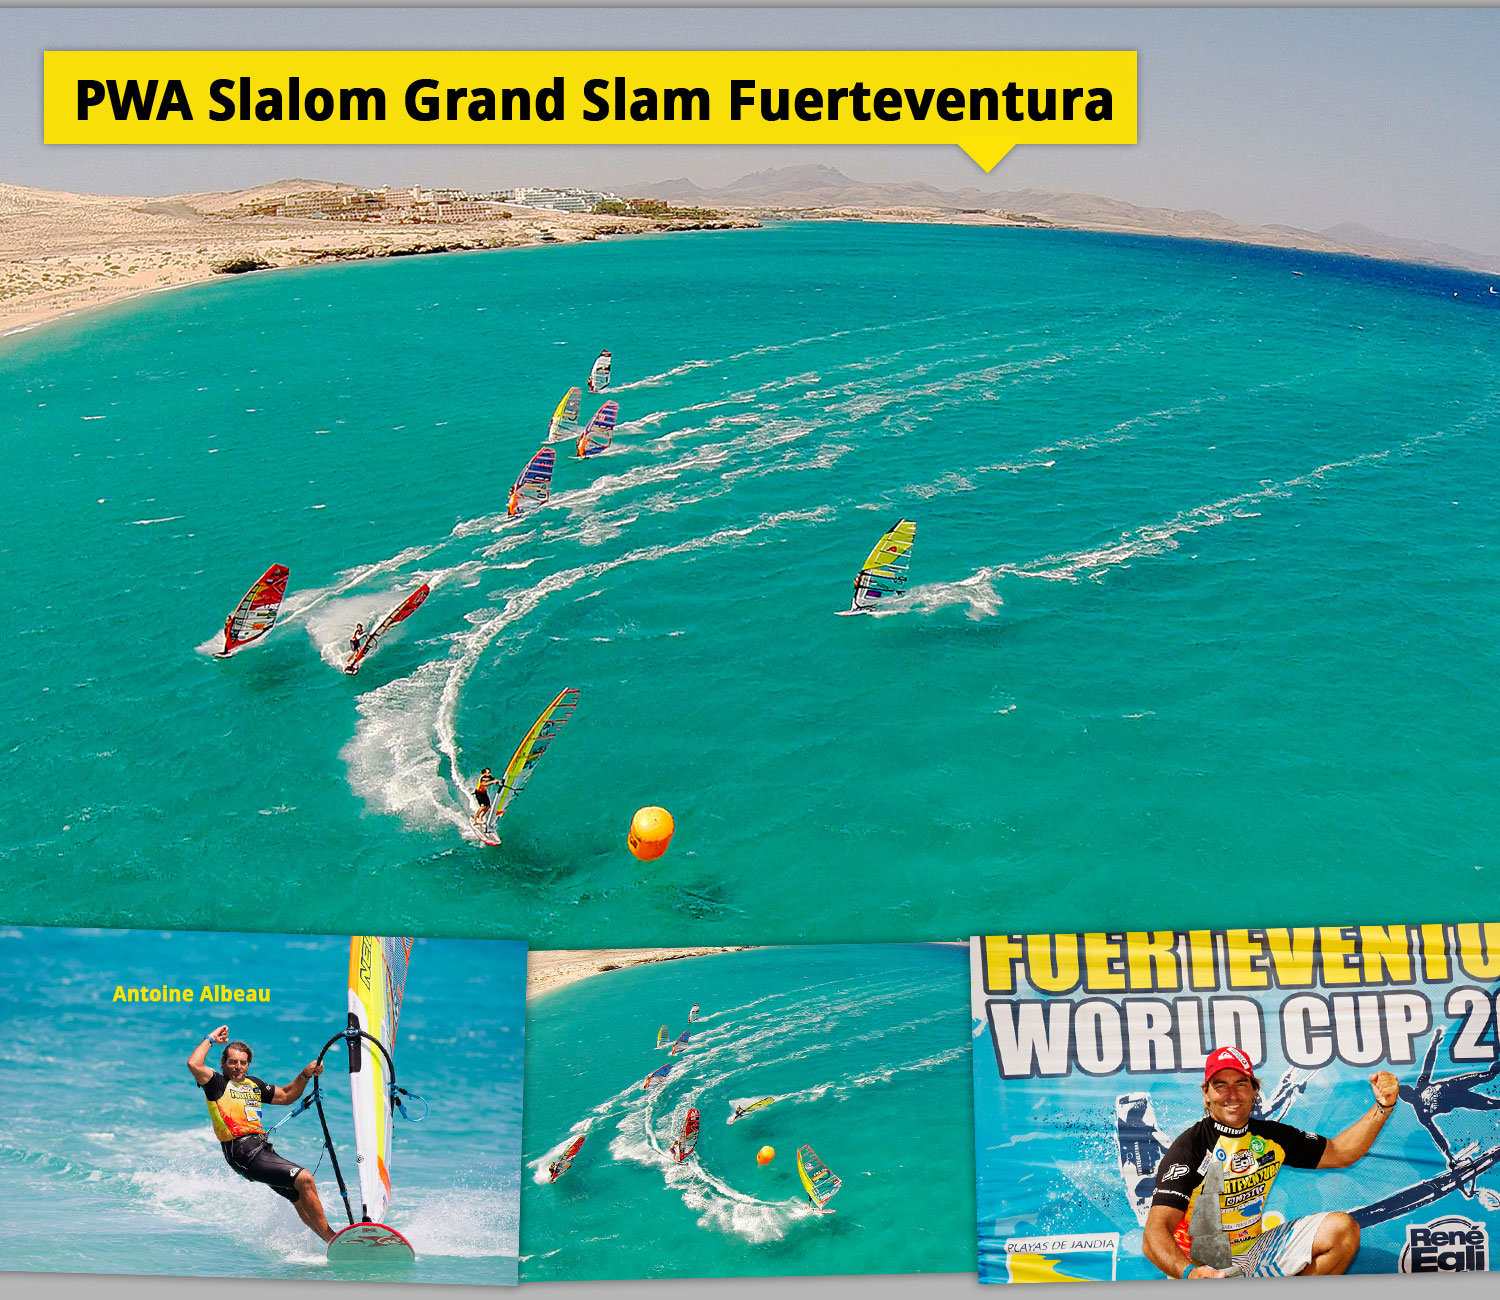 PWA Windsurf World Cup Fuerteventura 2014 - Slalom Grand Slam